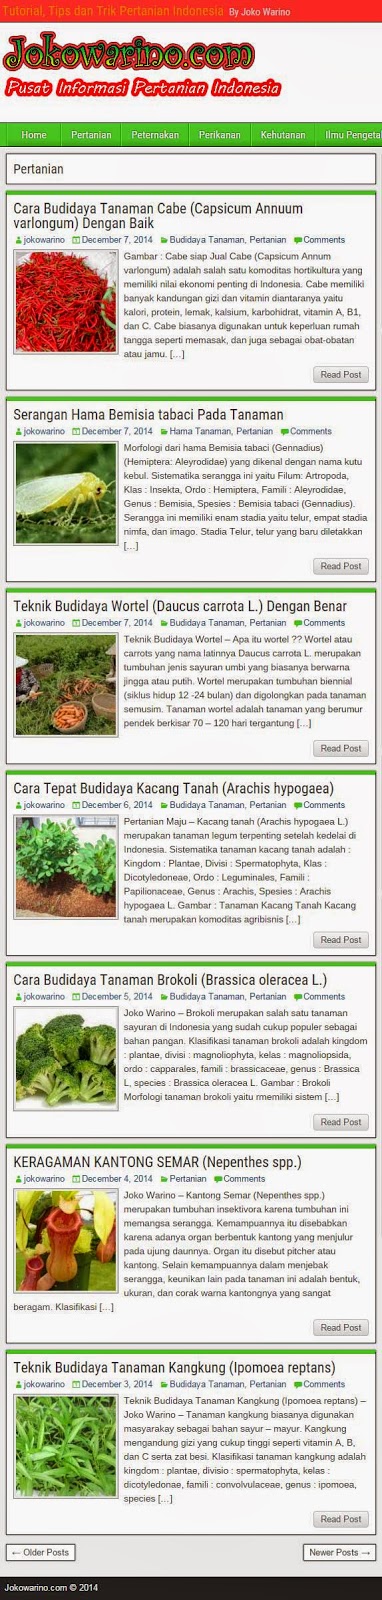 Jokowarino.com Tempat Berbagi Informasi Mengenai Pertanian Indonesia